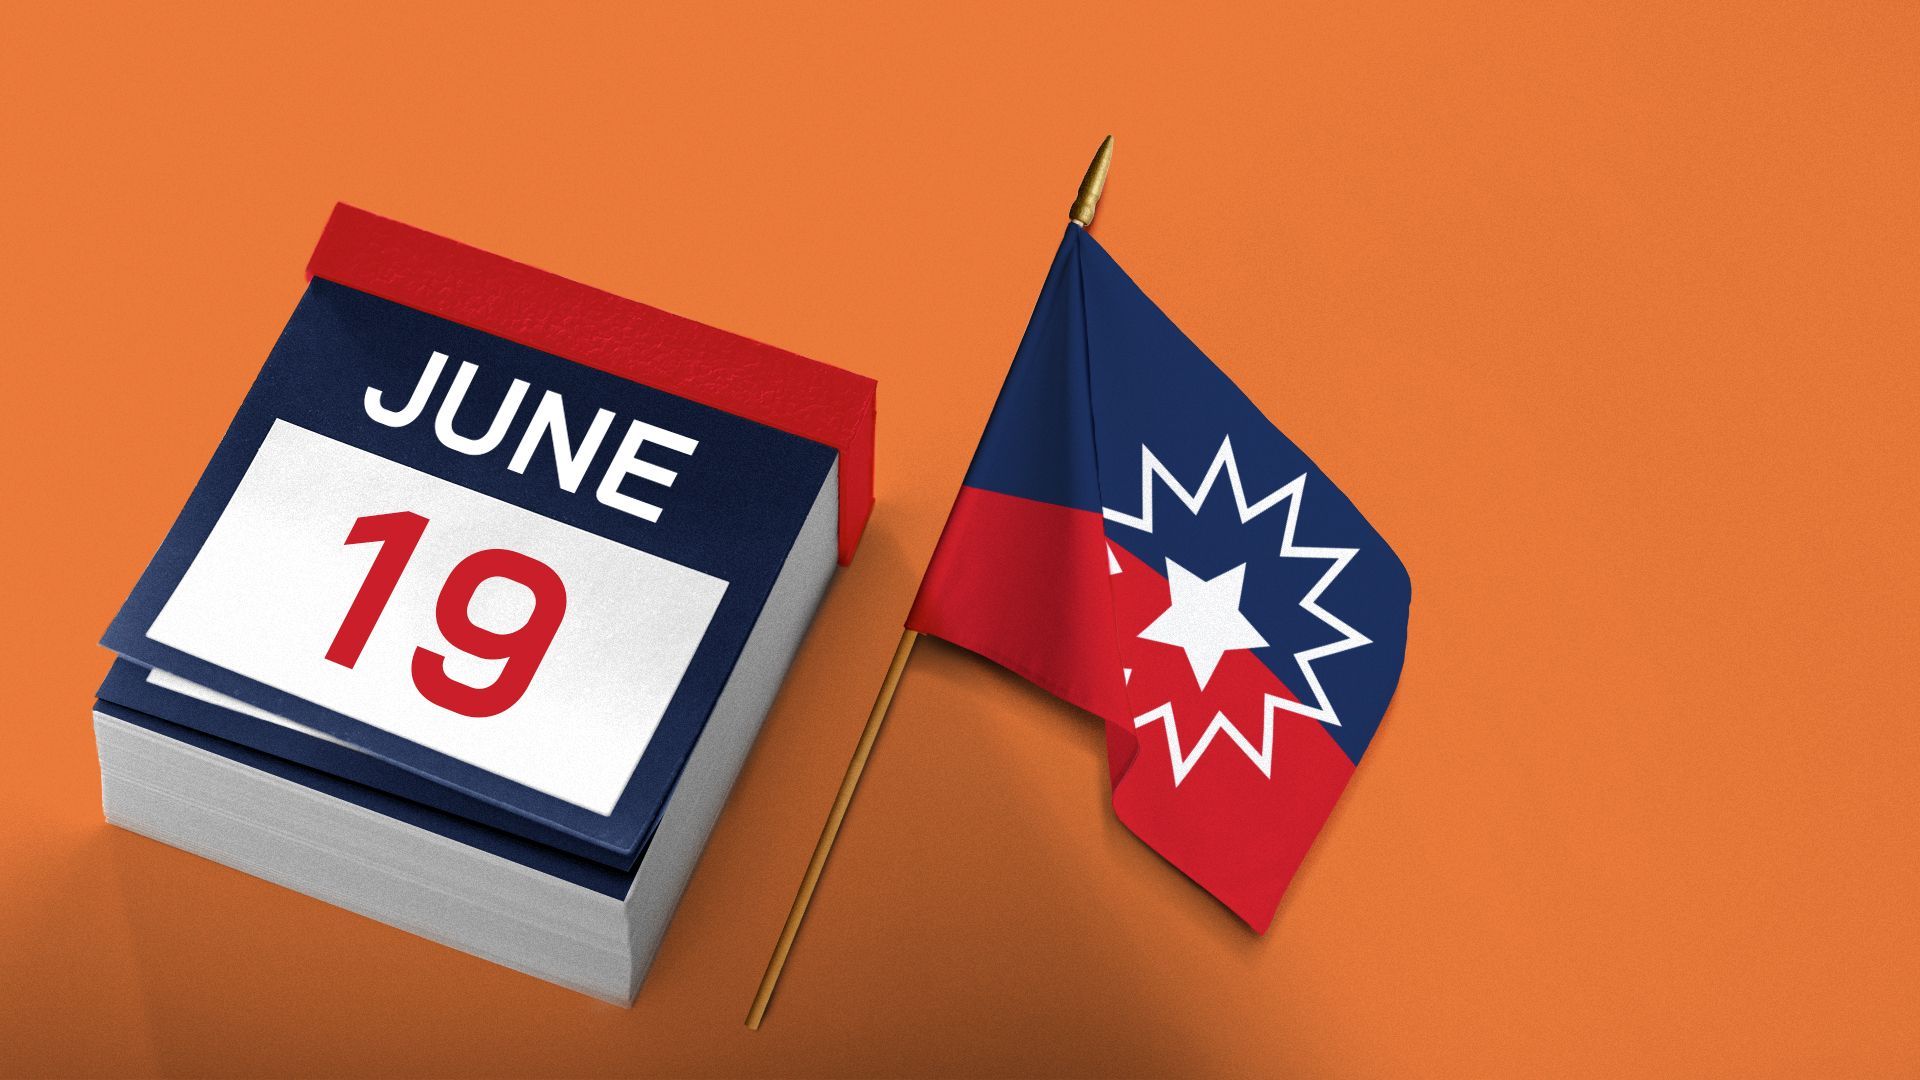 Illustration of the Juneteenth flag next to a desk calendar dated June 19.